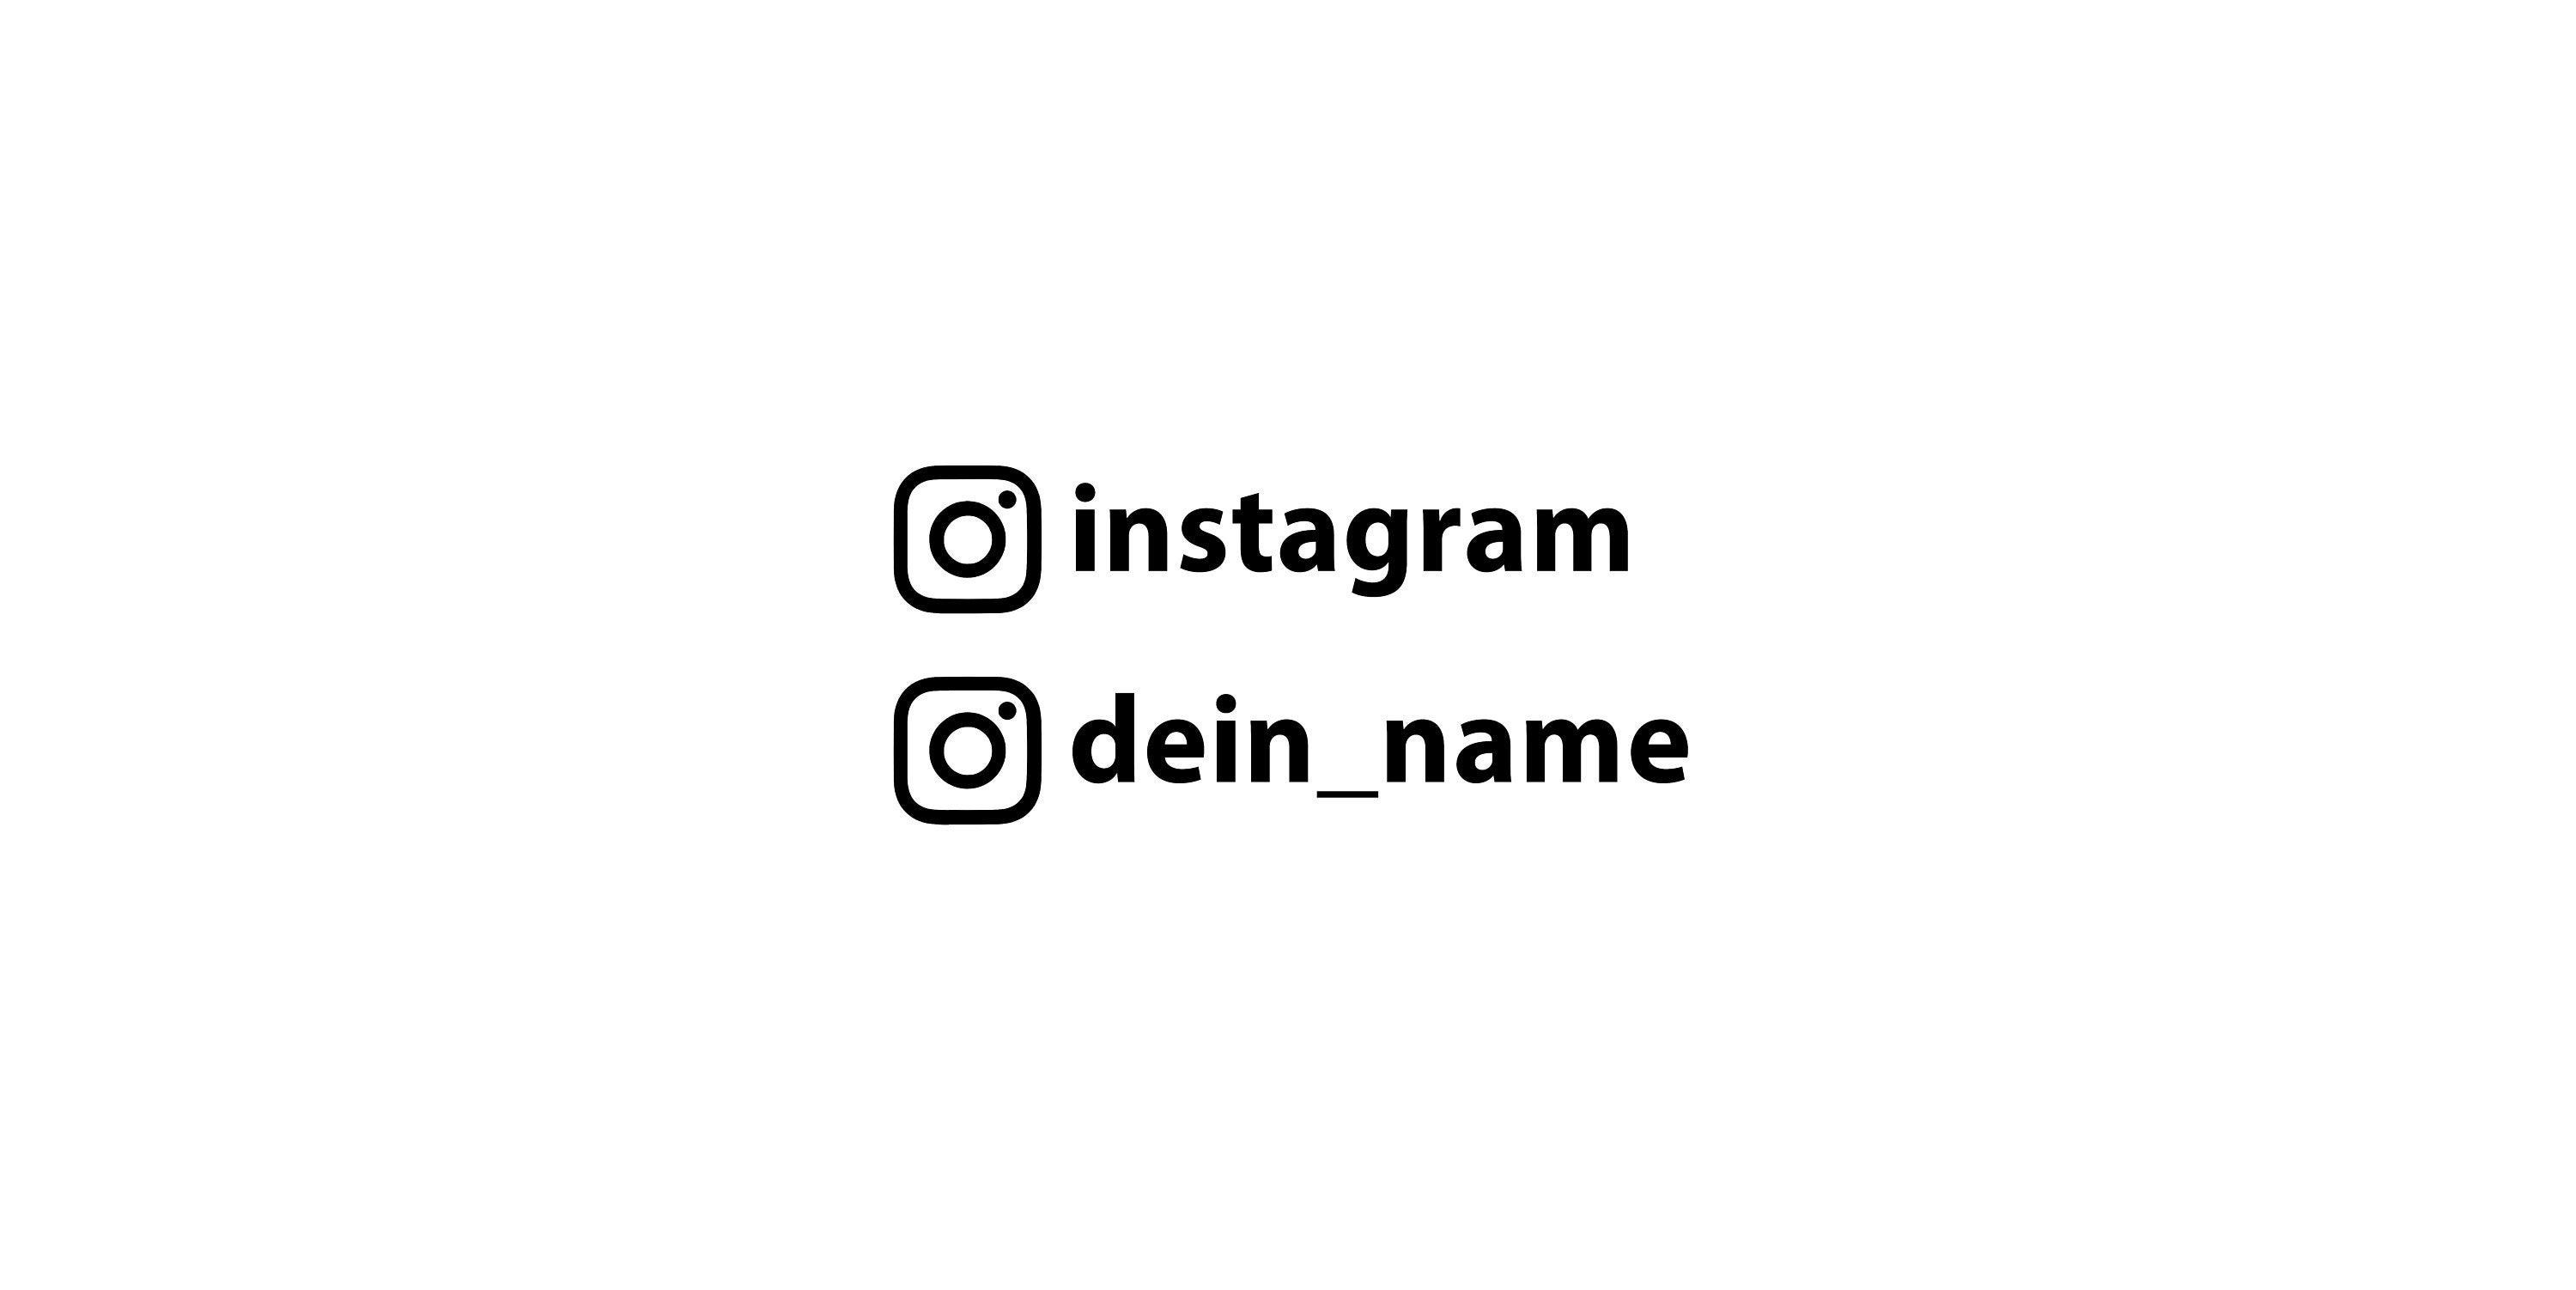 Instagram Aufkleber personalisiert - Wunschname, Auto, Tuning, JDM,  Motorrad, Laptop